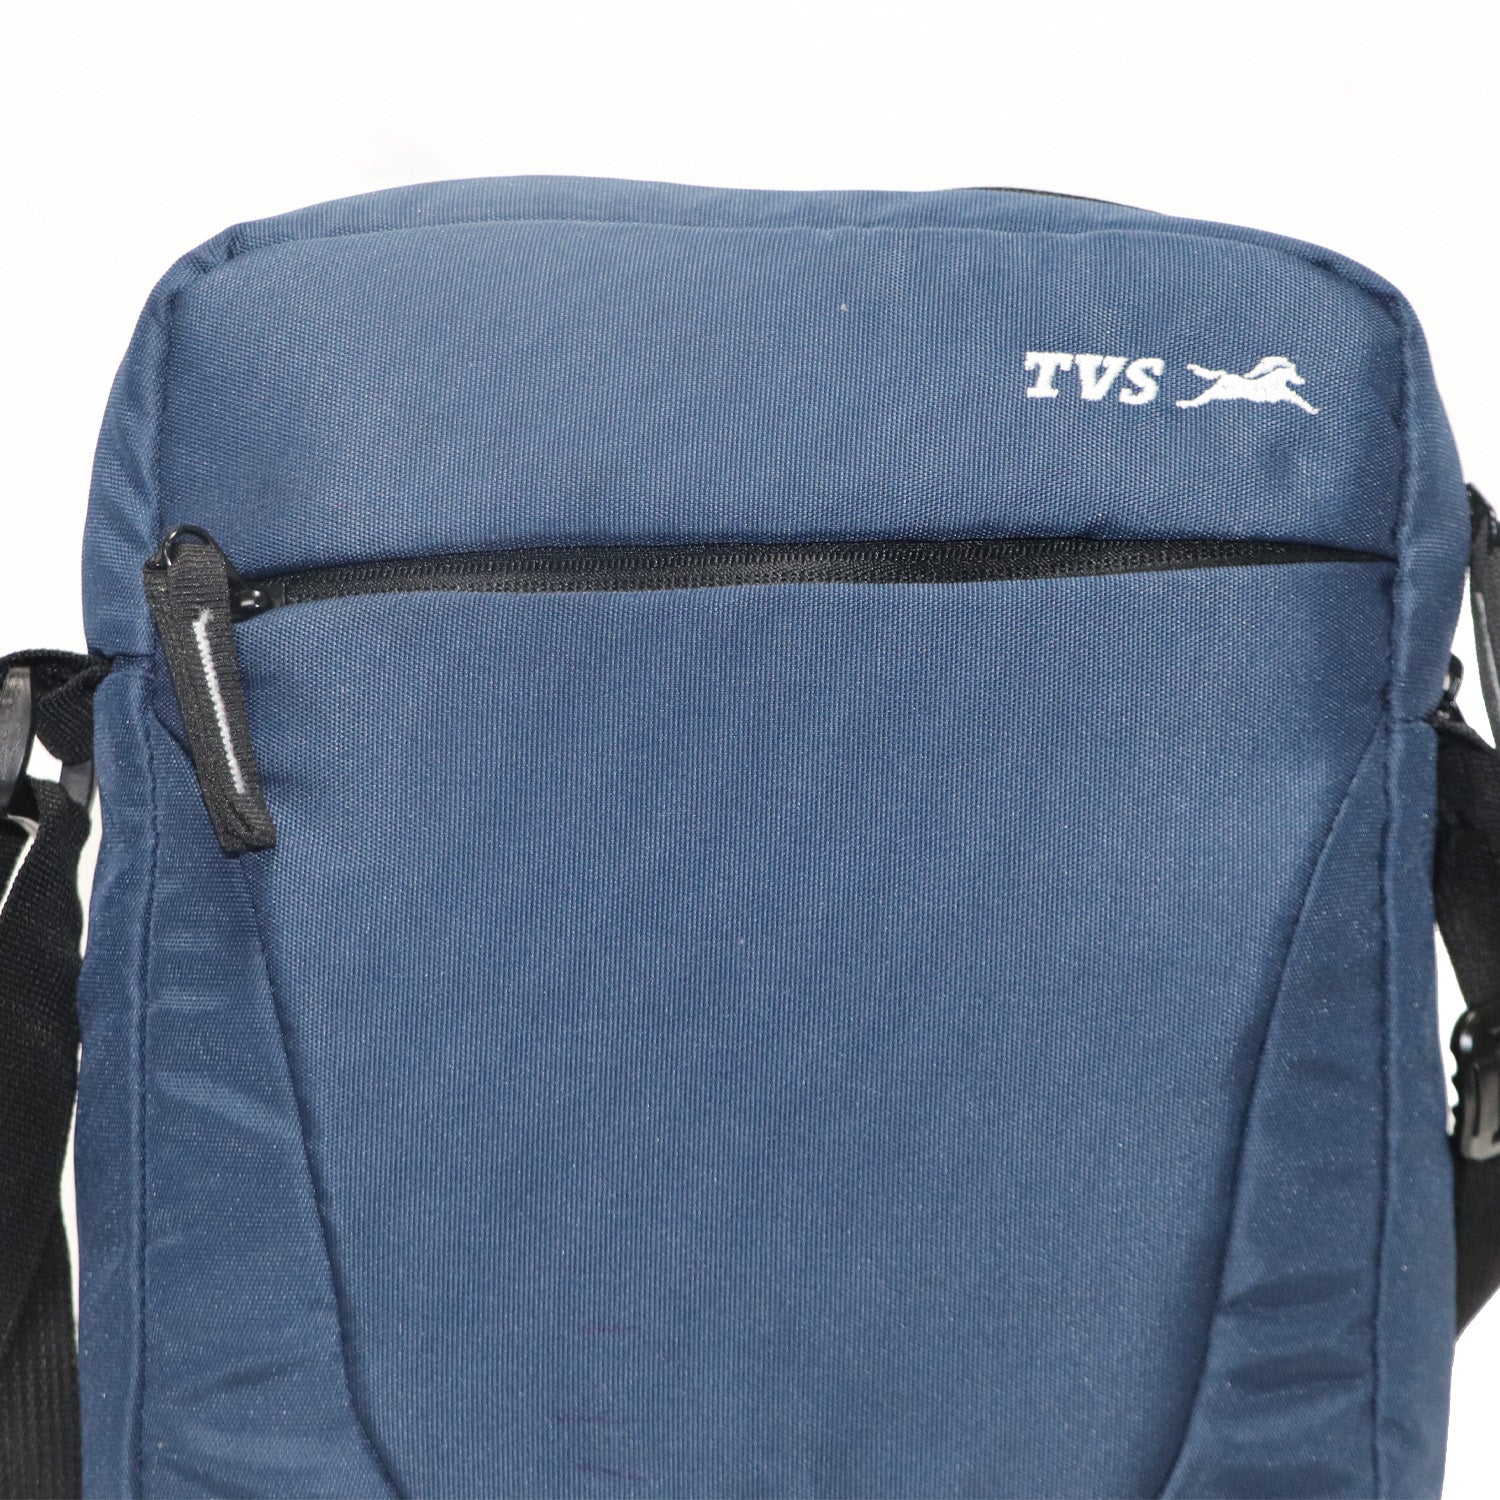  TVS Crossbody Bag